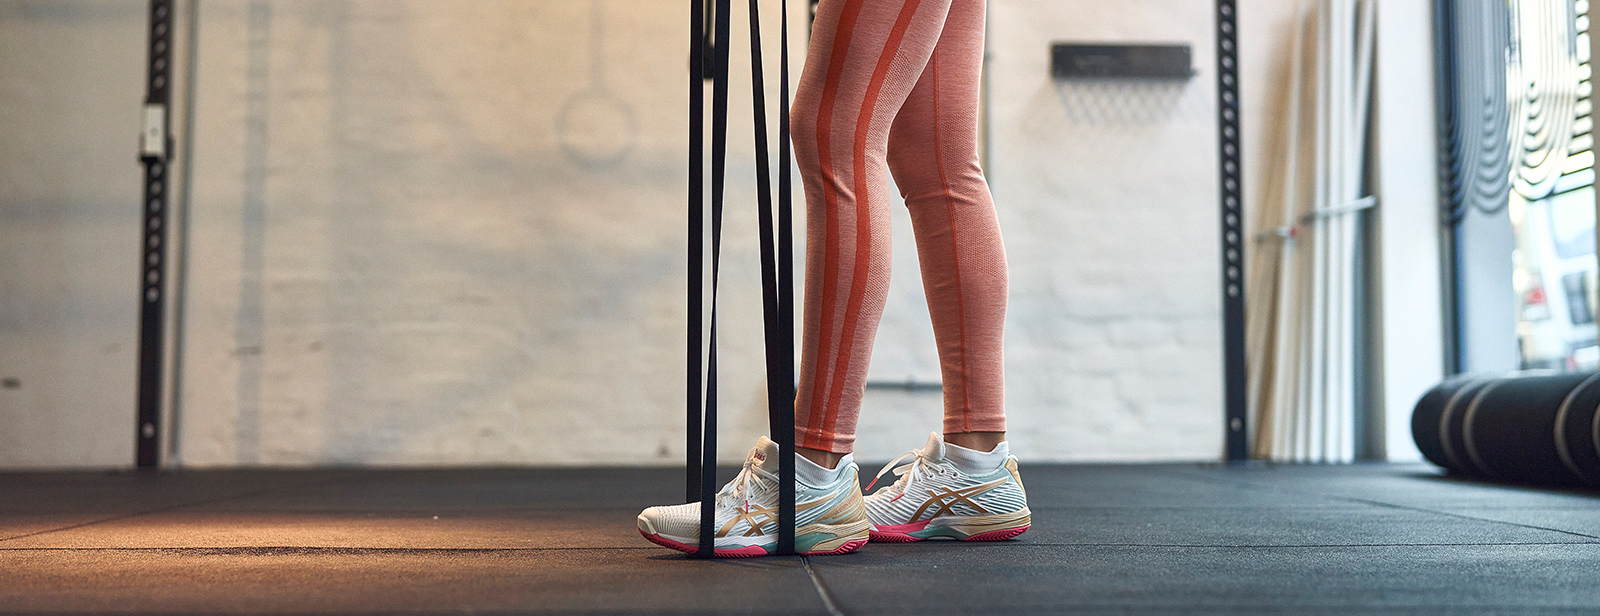 Pilates course feet in straps Yoga workout sport' Women's T-Shirt